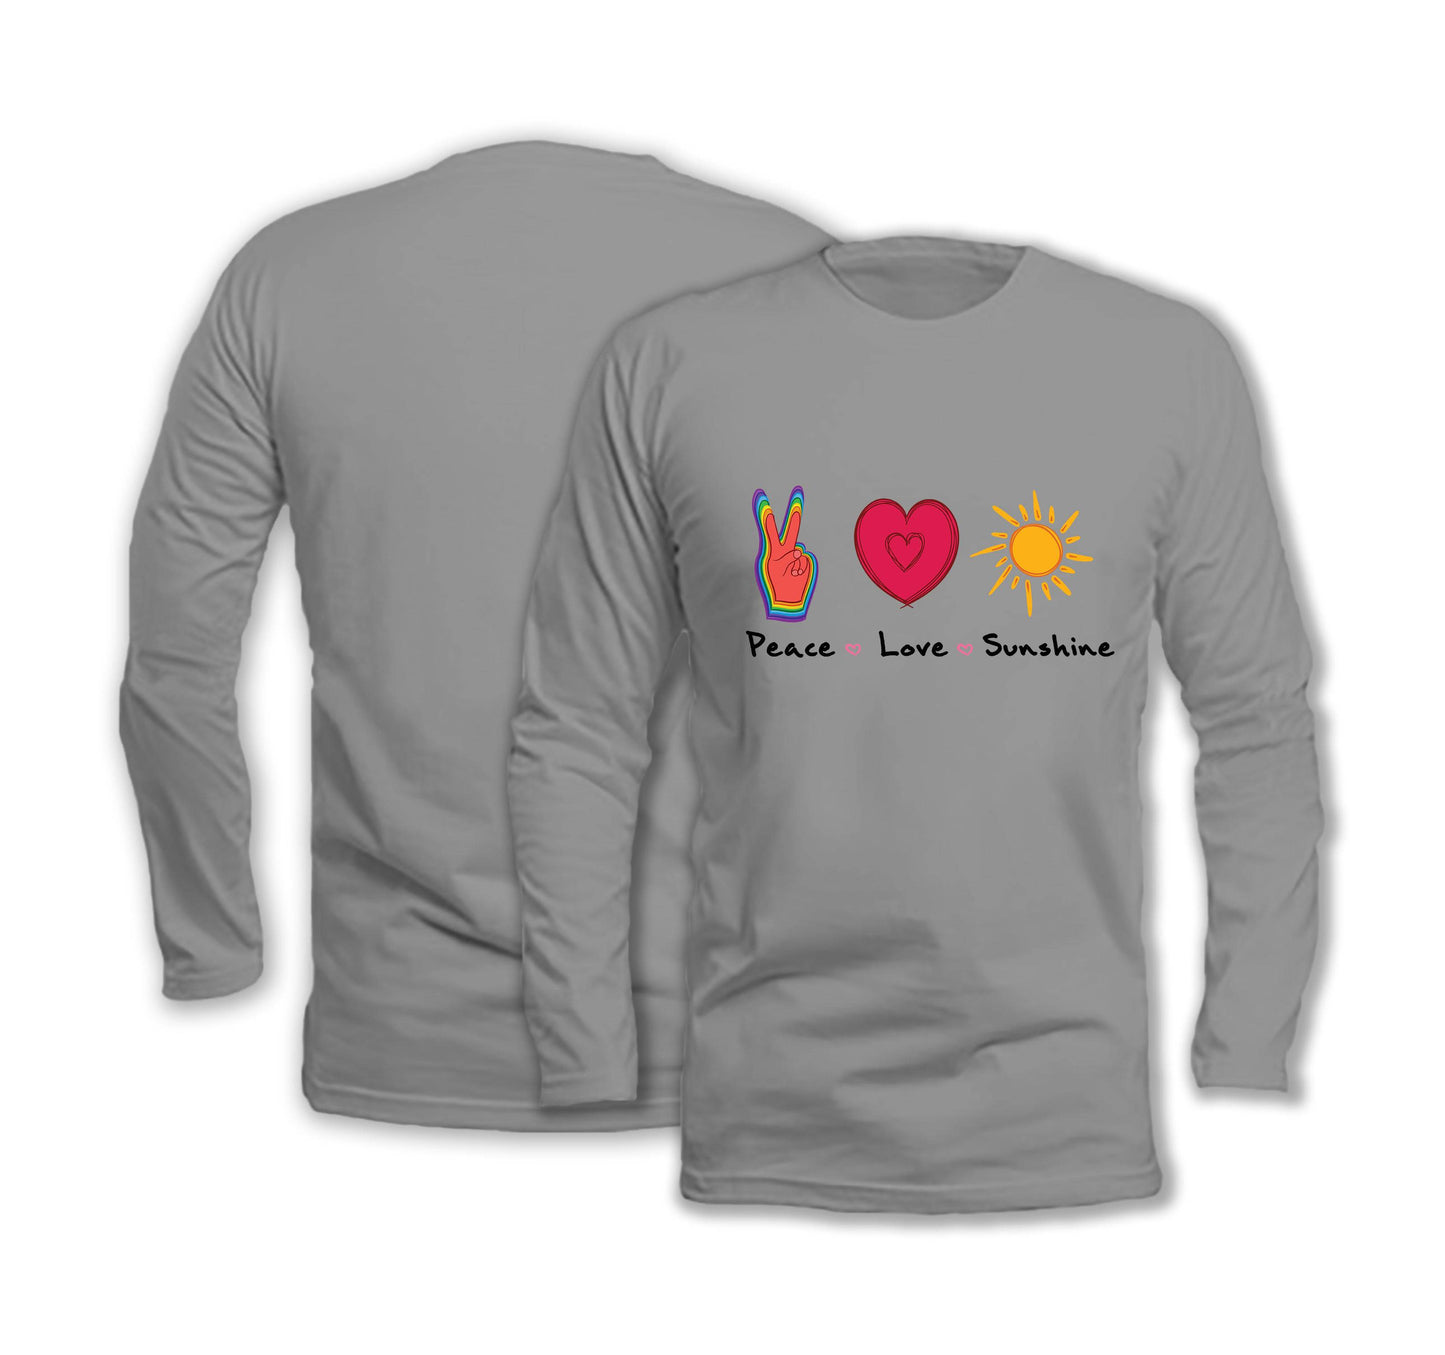 Peace Love & Sunshine - Long Sleeve Organic Cotton T-Shirt - One Choice Apparel